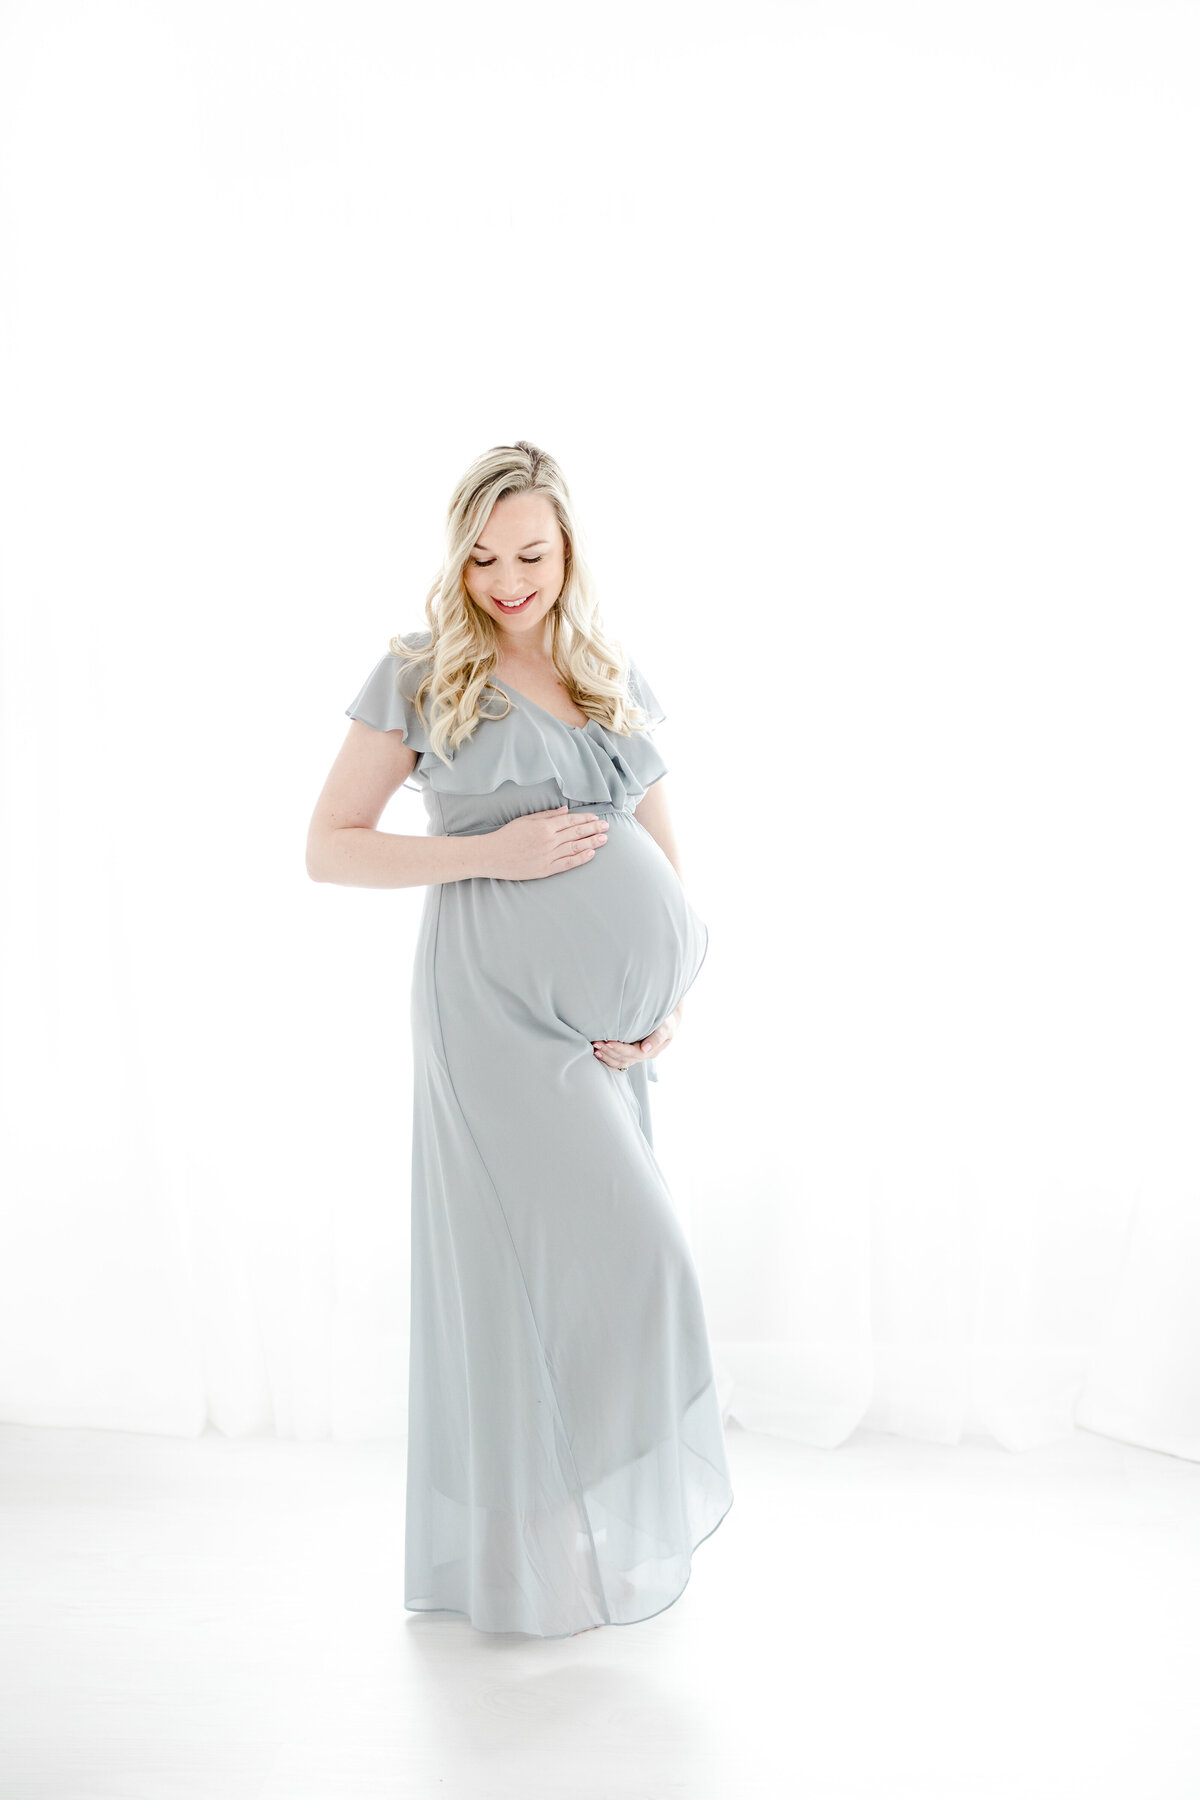 Westport CT Maternity Photographer - 44